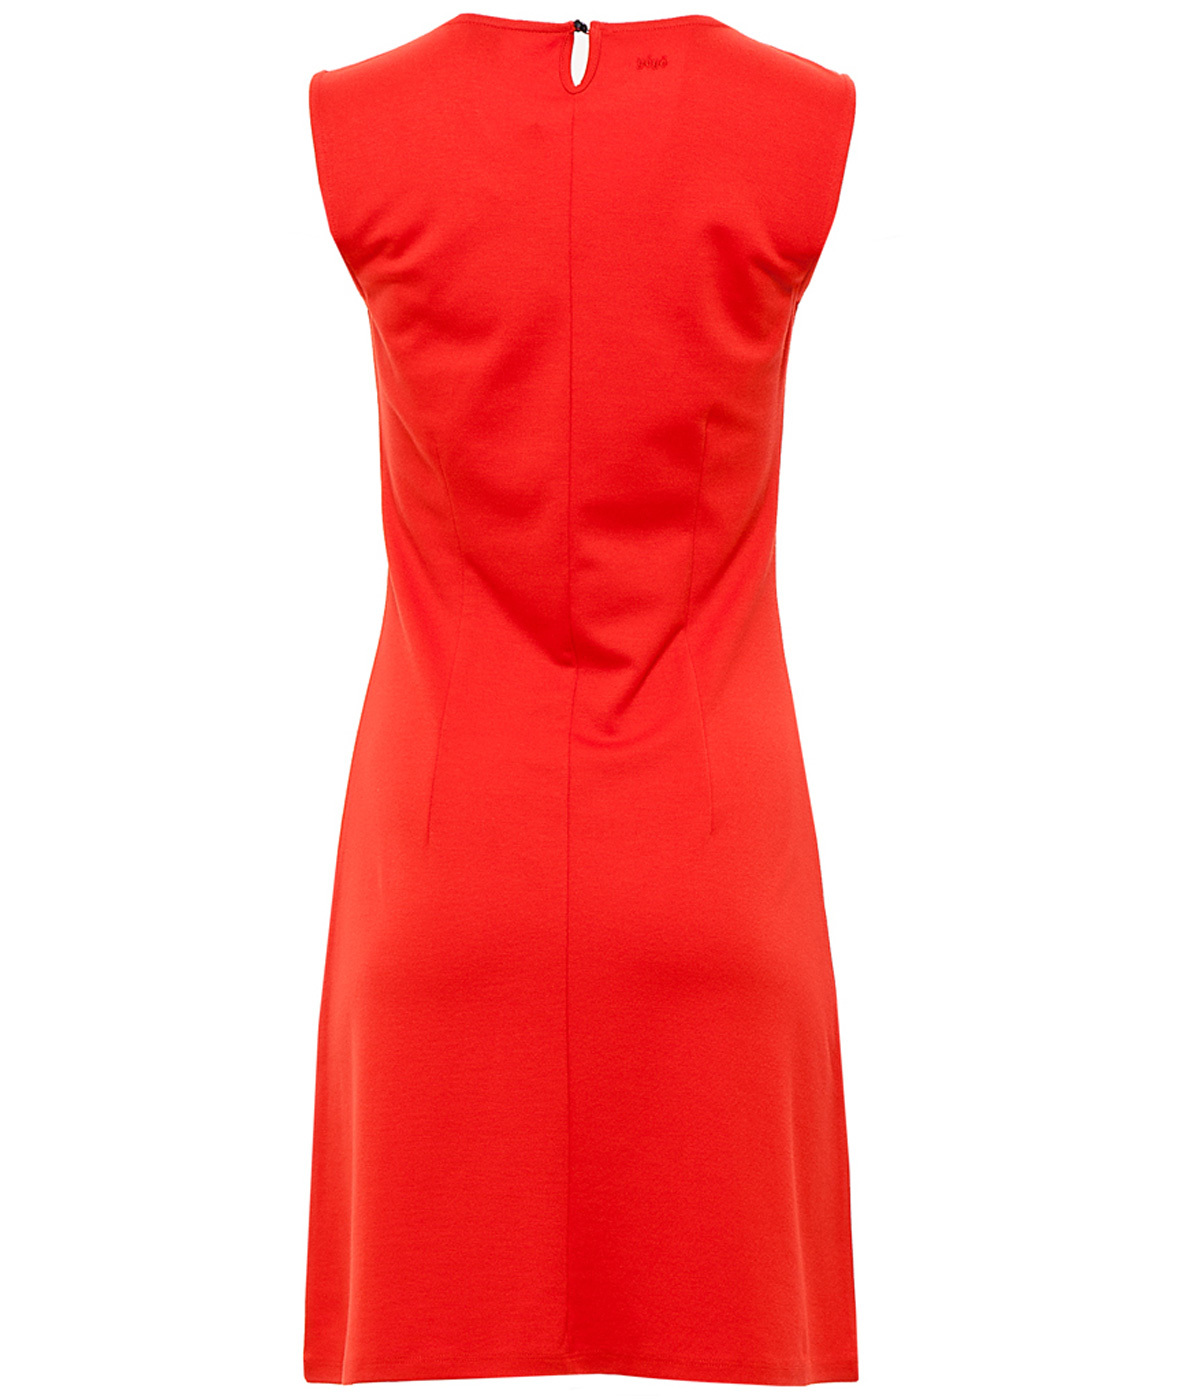 MADEMOISELLE YEYE Lulu Retro Mod 1960s Bow Dress in Red